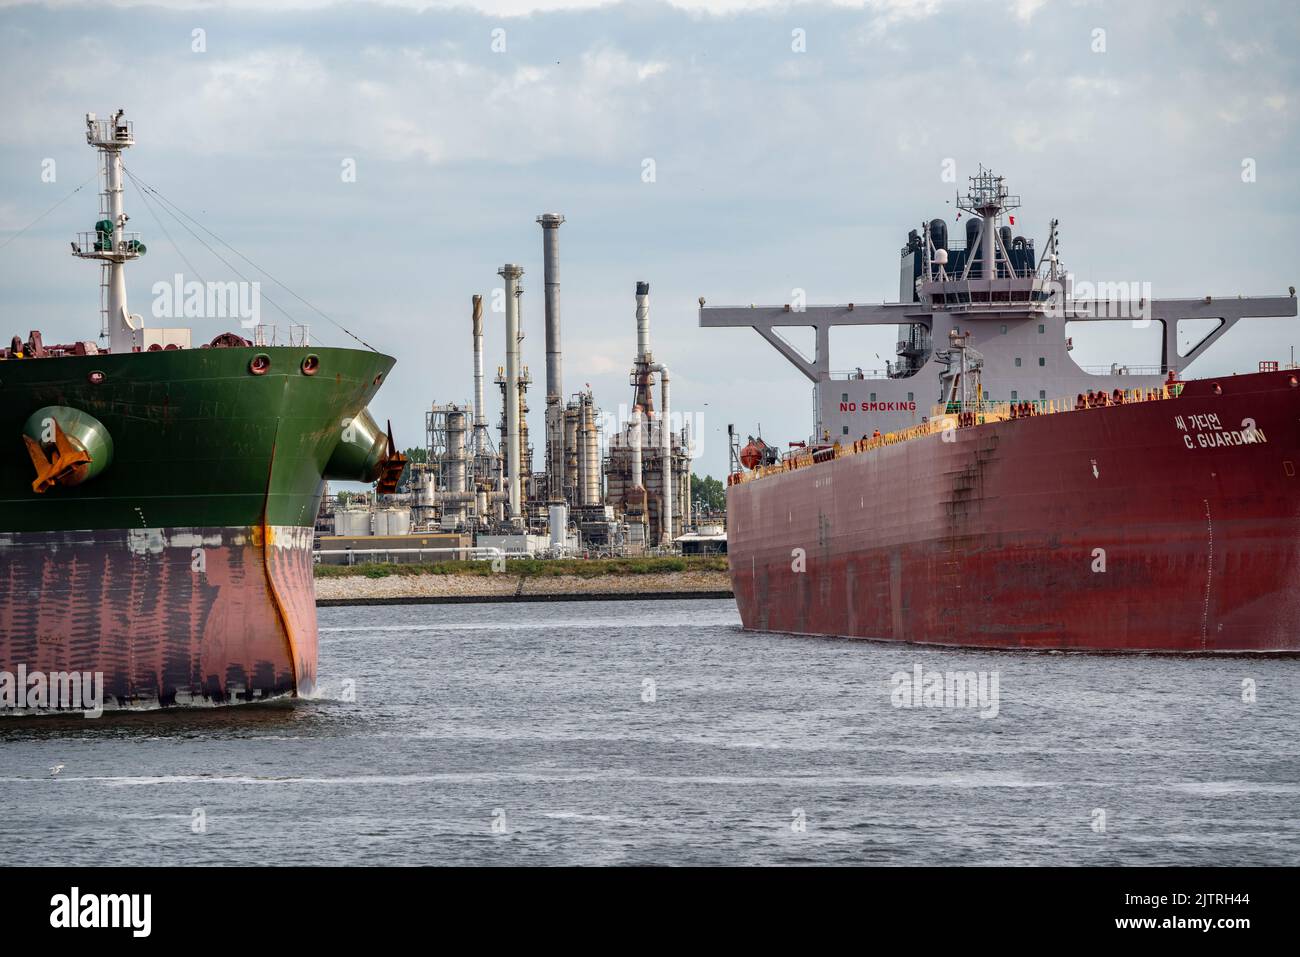 Petroleumhaven, Shell Terminal Europoort, azienda petrolifera, serbatoi alla rinfusa e terminali di carico per navi d'oltremare e interne, Europoort bulk Tanke Foto Stock